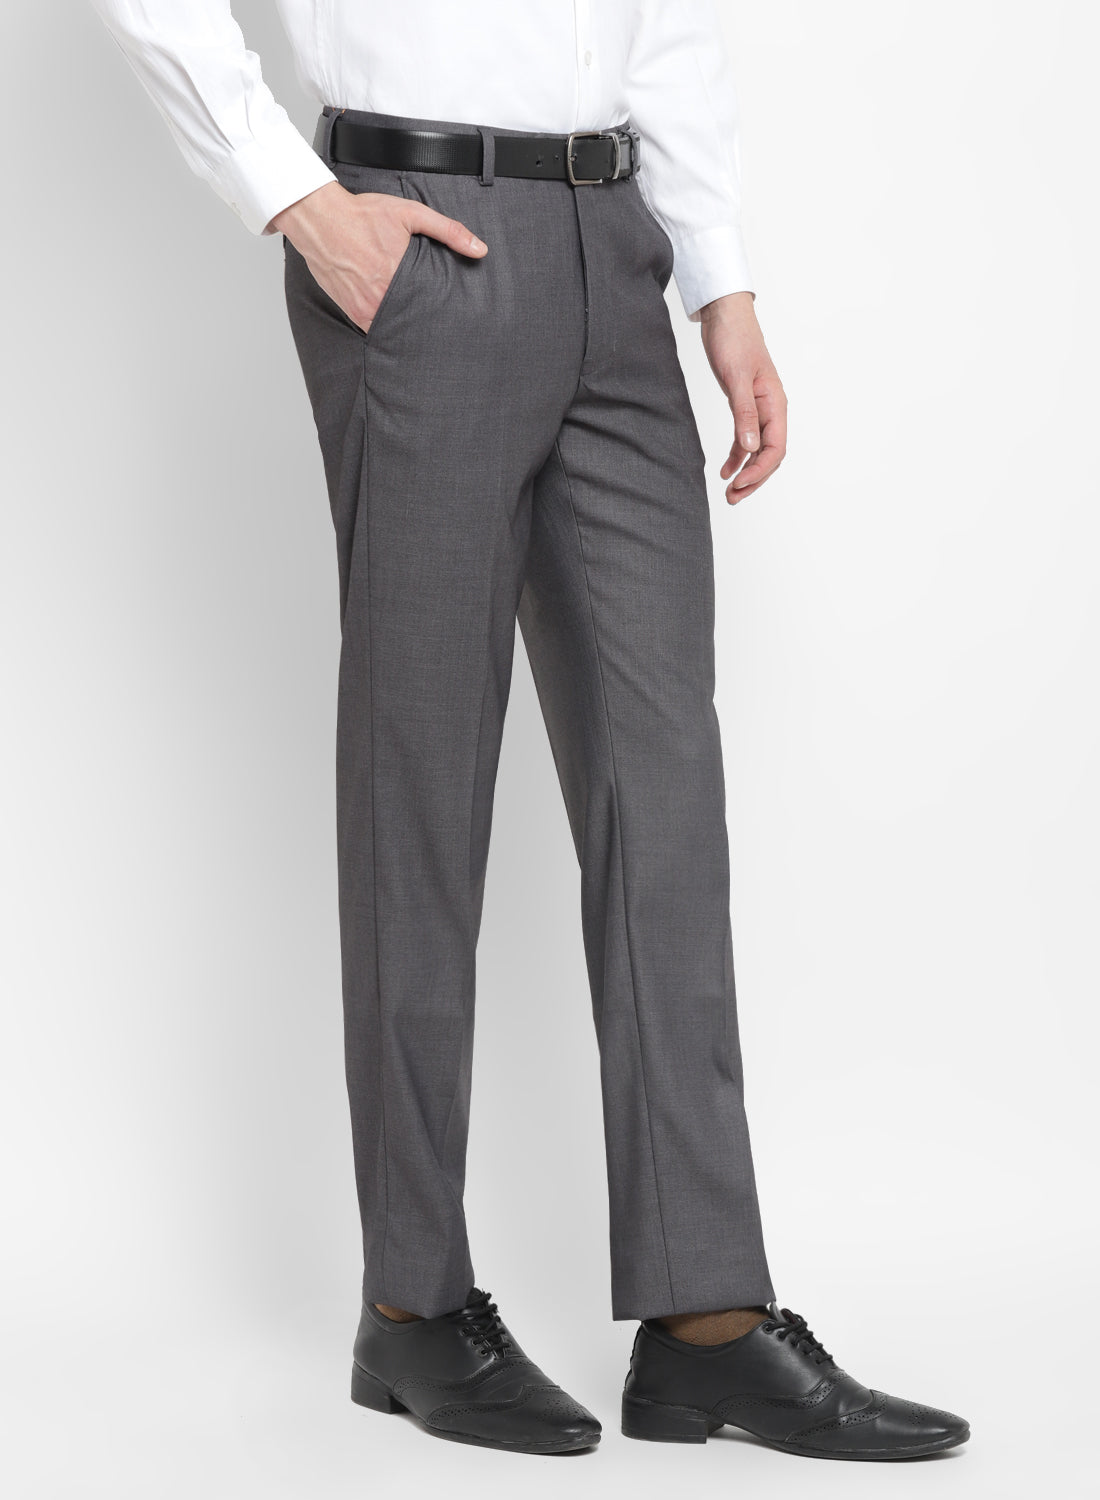 Buy Raymond Dark Grey Trouser Size 32RMTS04709G8 at Amazonin